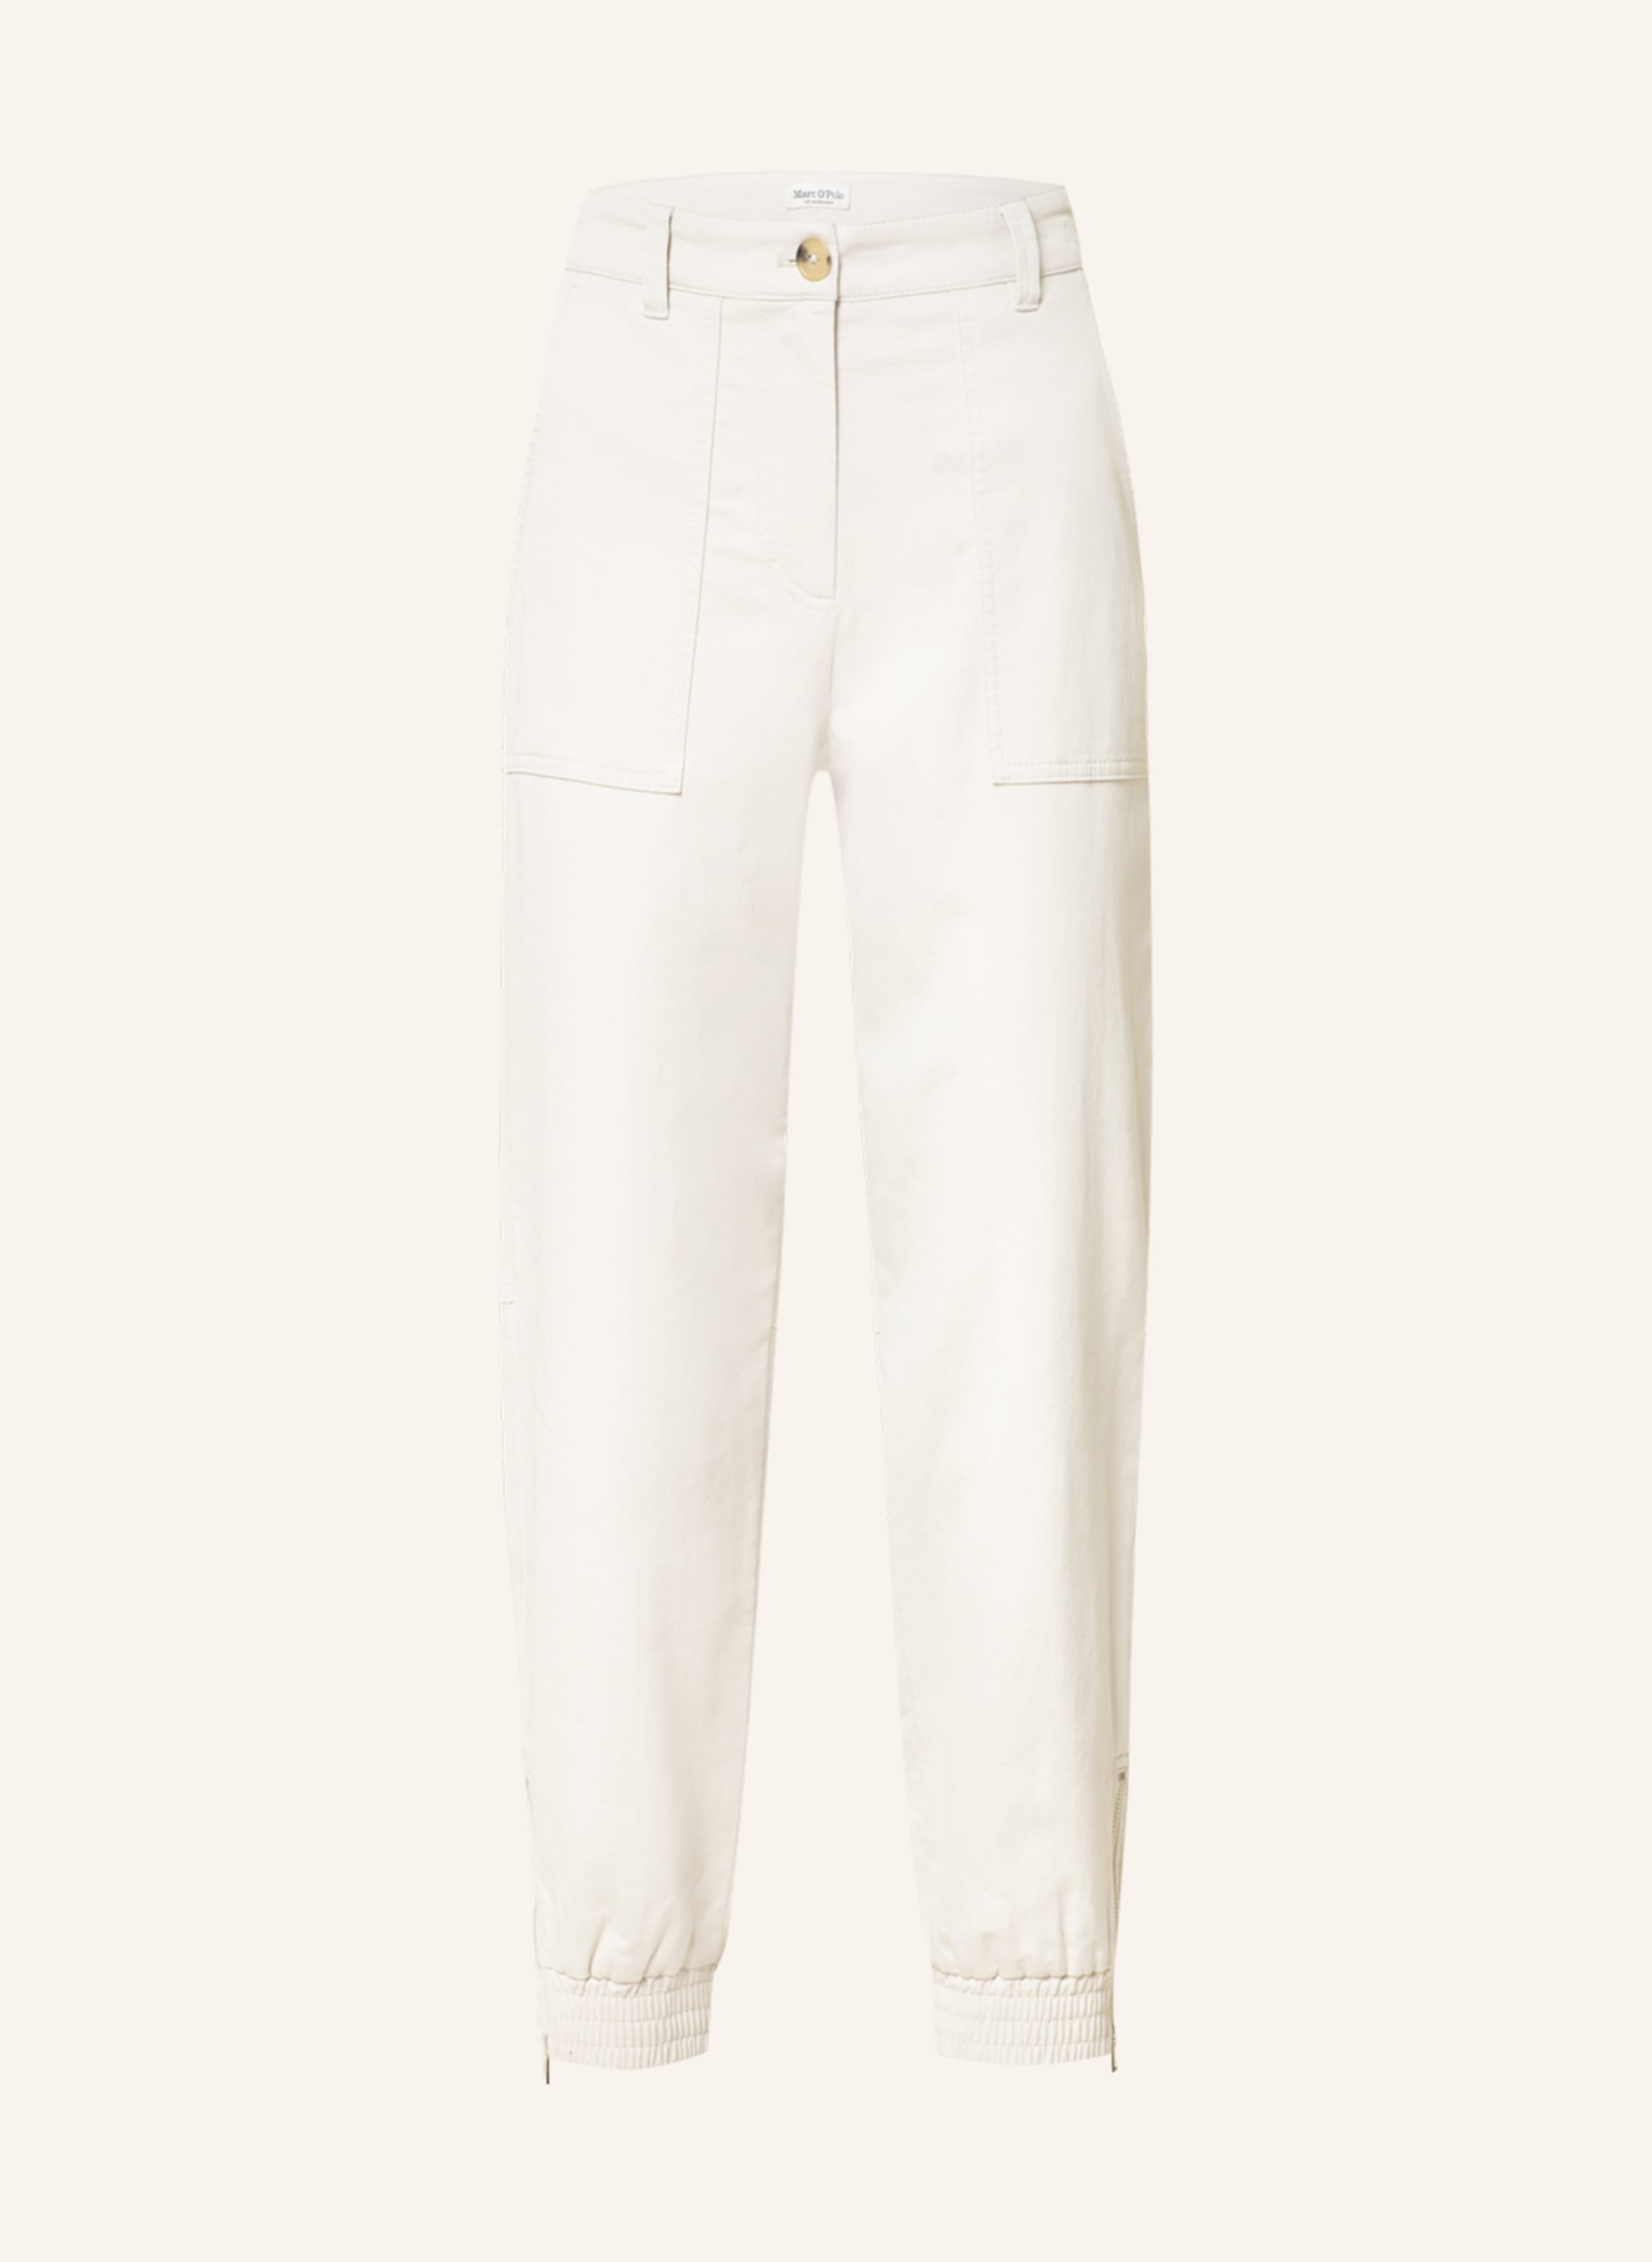 Moda Pantalones Pantalones de camuflaje Marc O’Polo Marc O\u2019Polo Pantal\u00f3n de camuflaje blanco puro look casual 